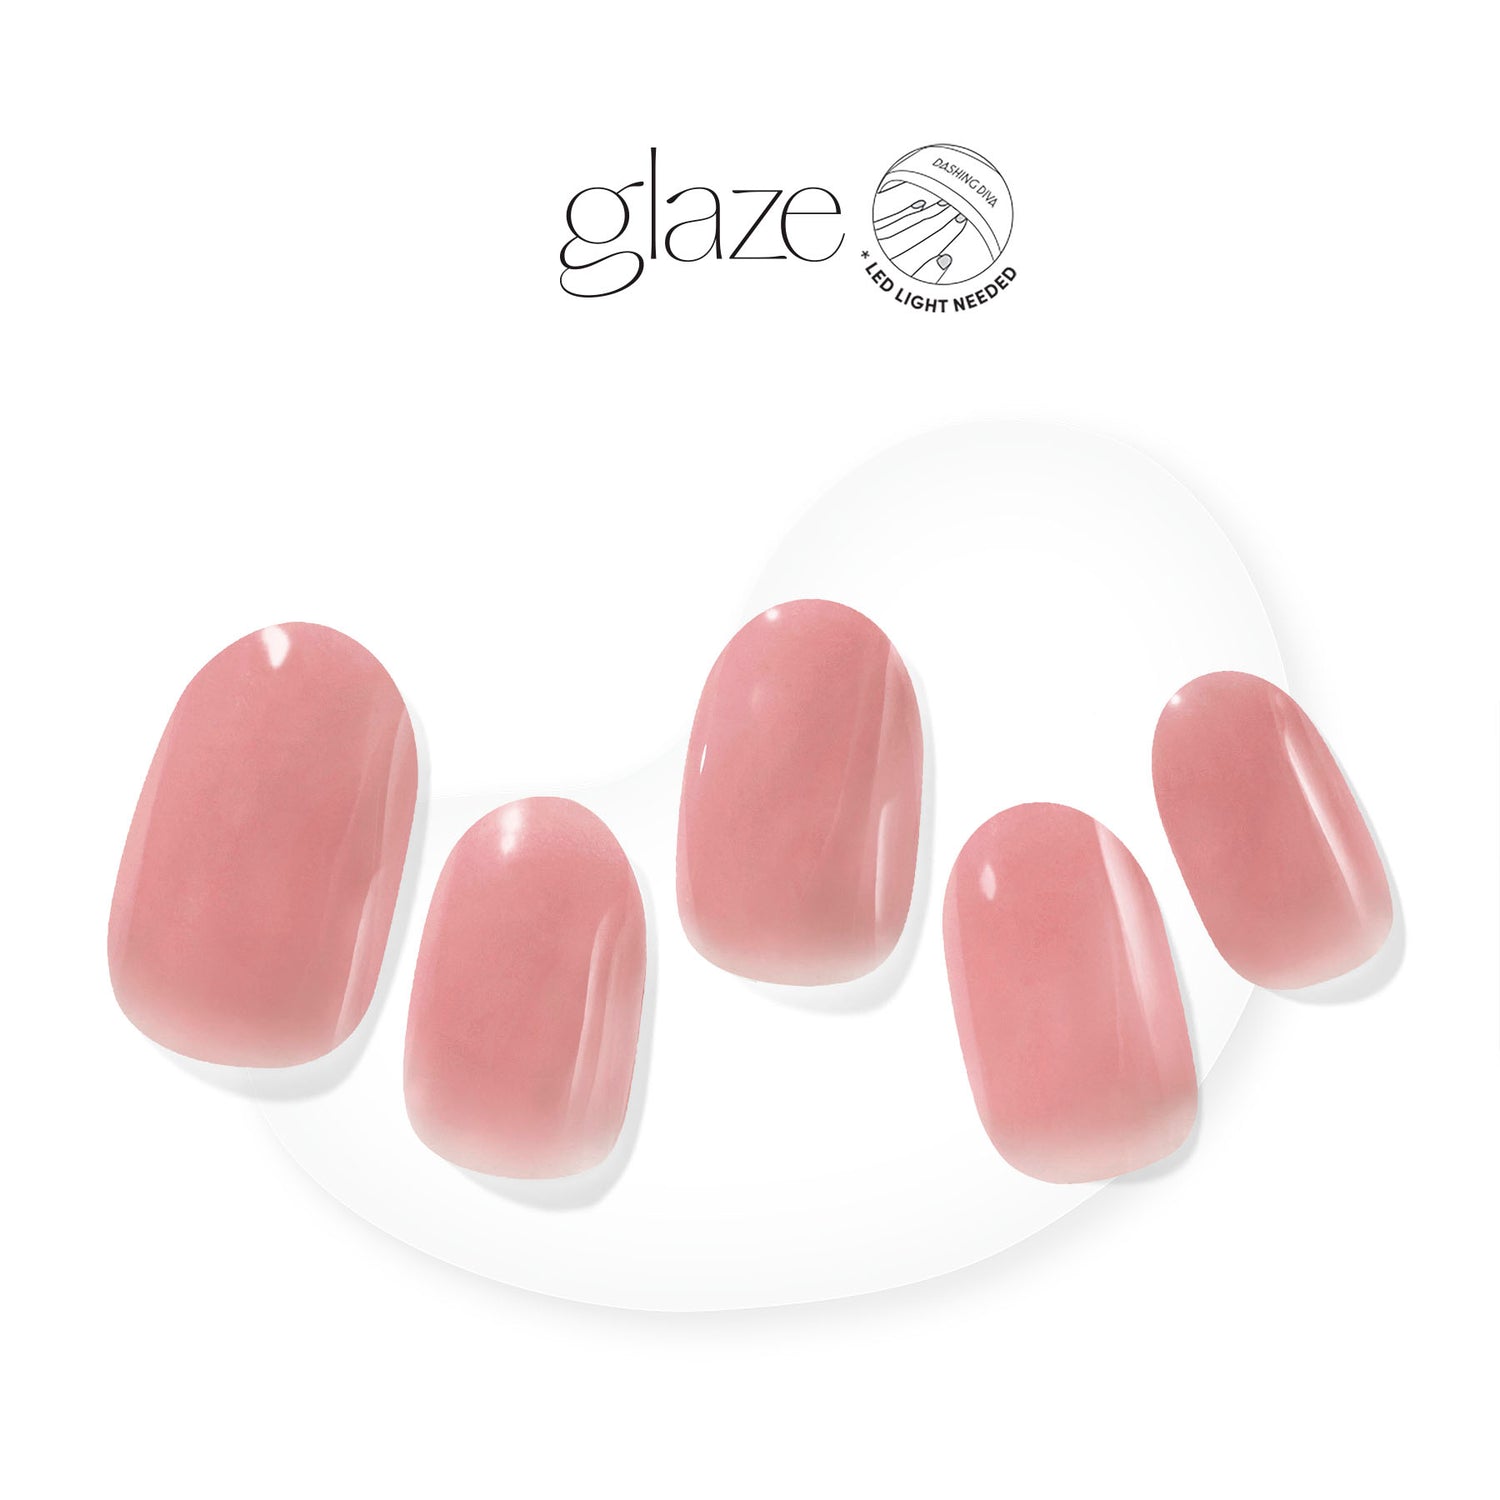 No one rocks blush like you, babe. Semi-cured, mauve pink gel nail strips with mega volume & a sheer finish.